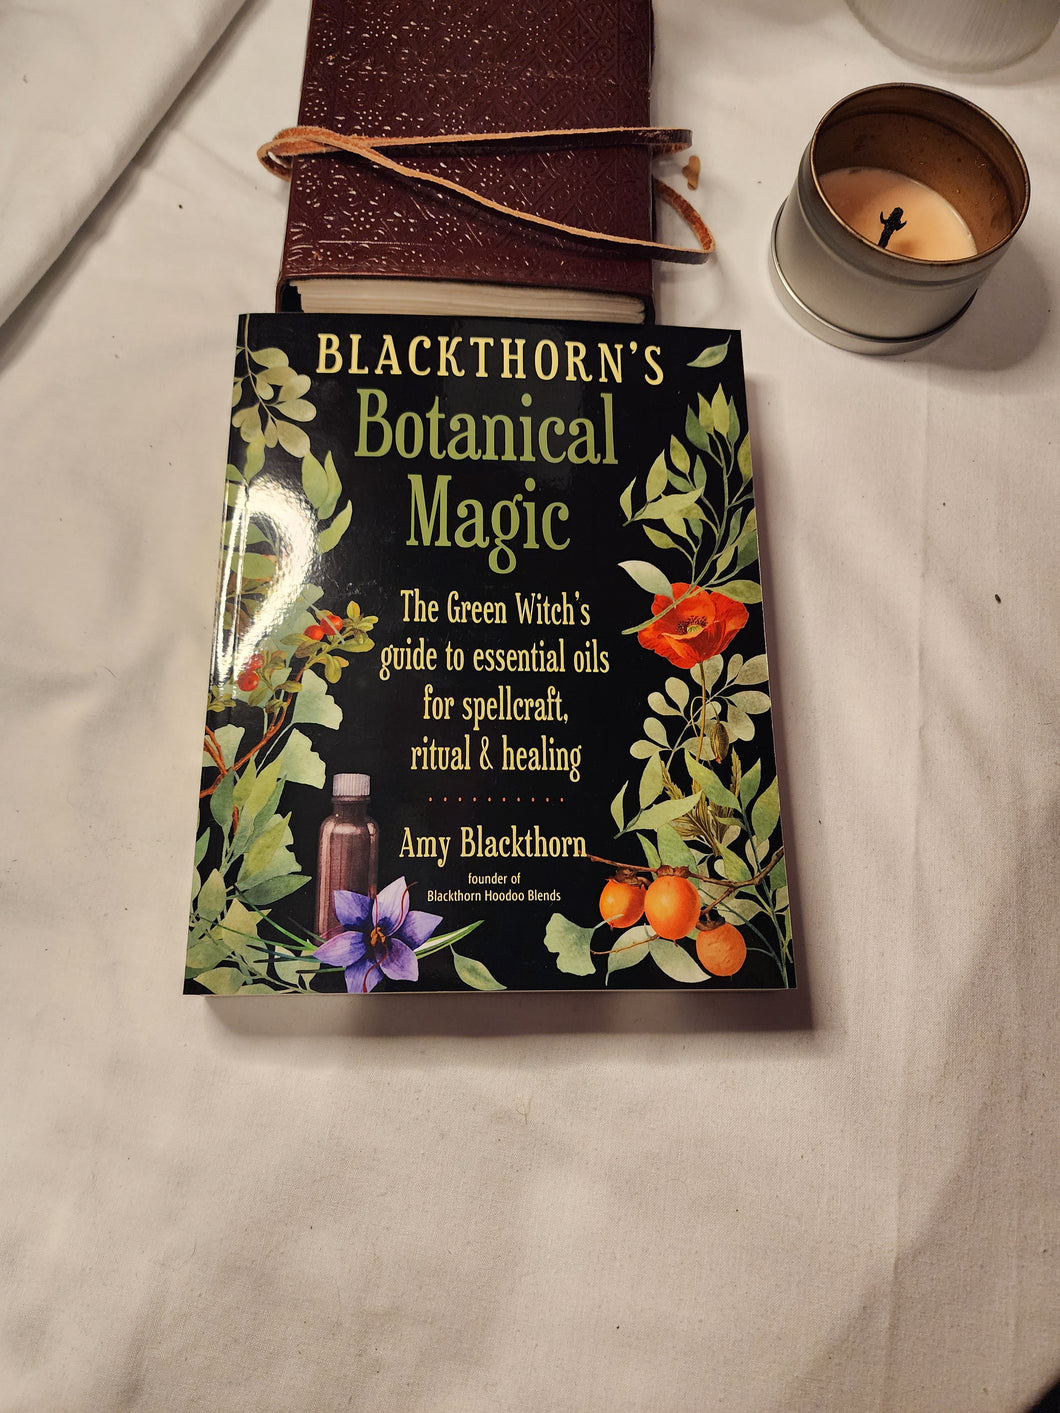 Blackthorn's Botanical Magic by Amy Blackthorn